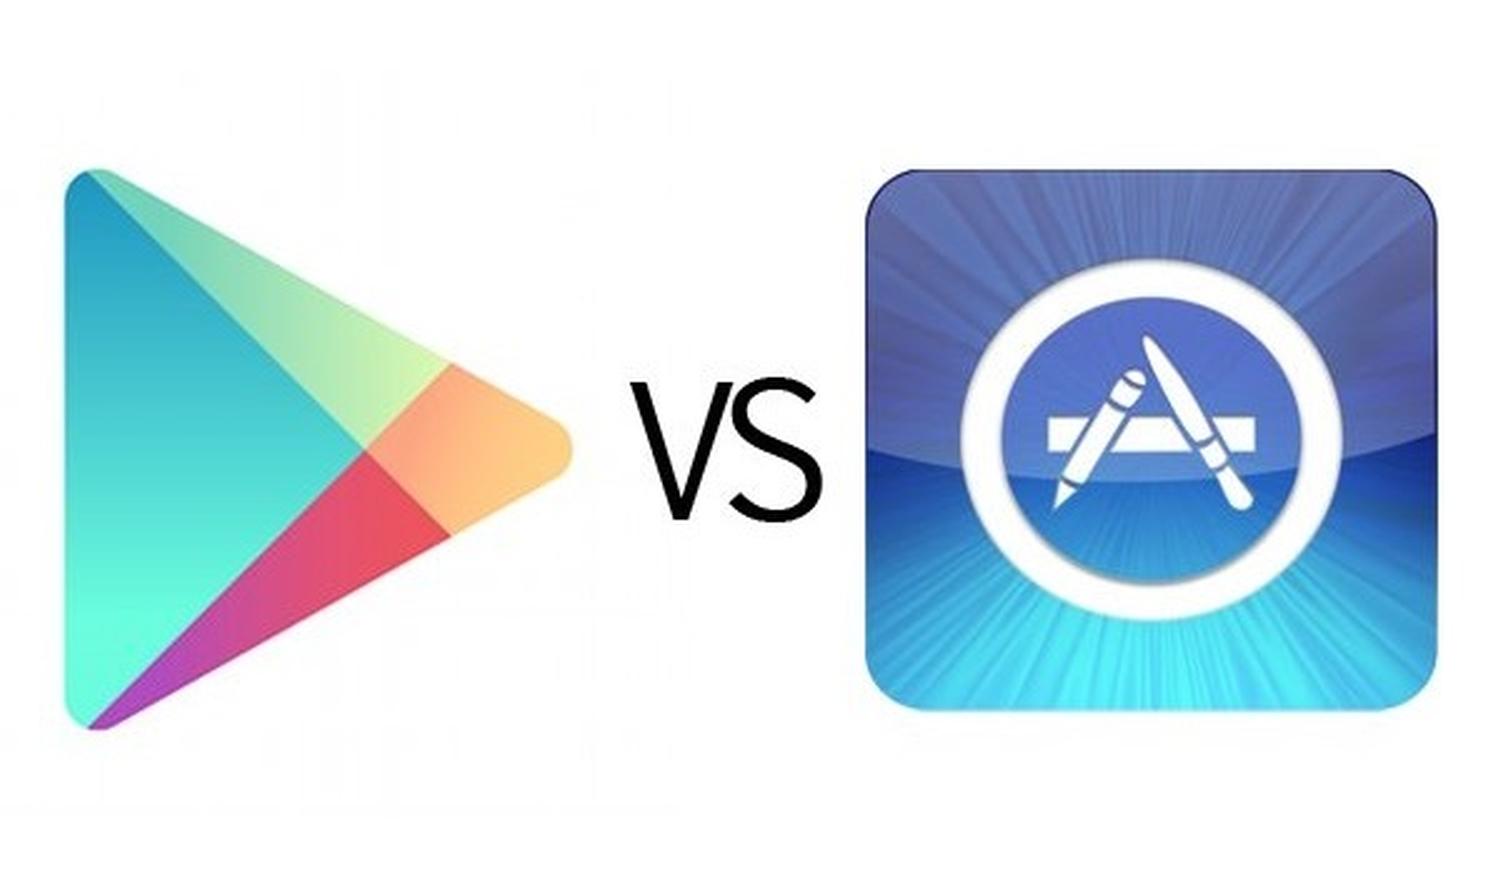 google play vs app store